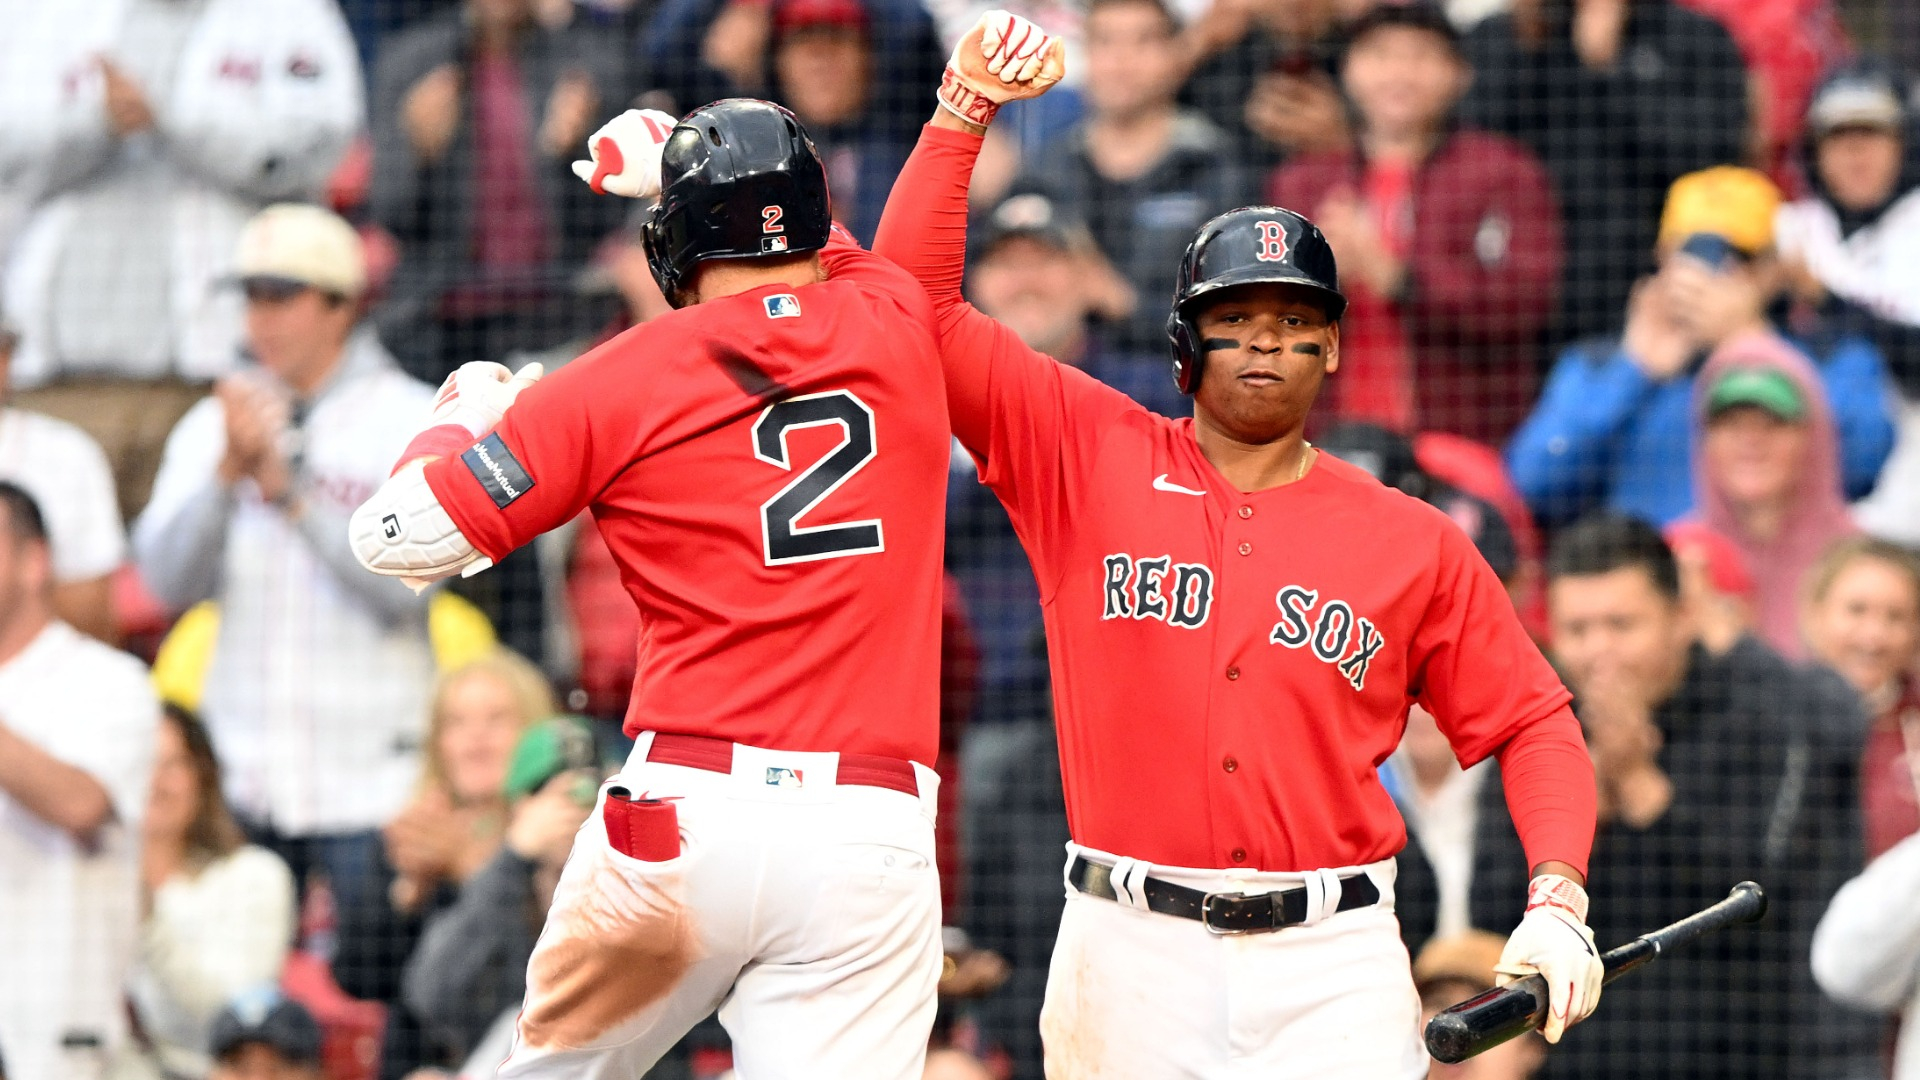 Devers breaks tie in 6-run 8th, Red Sox beat Reds